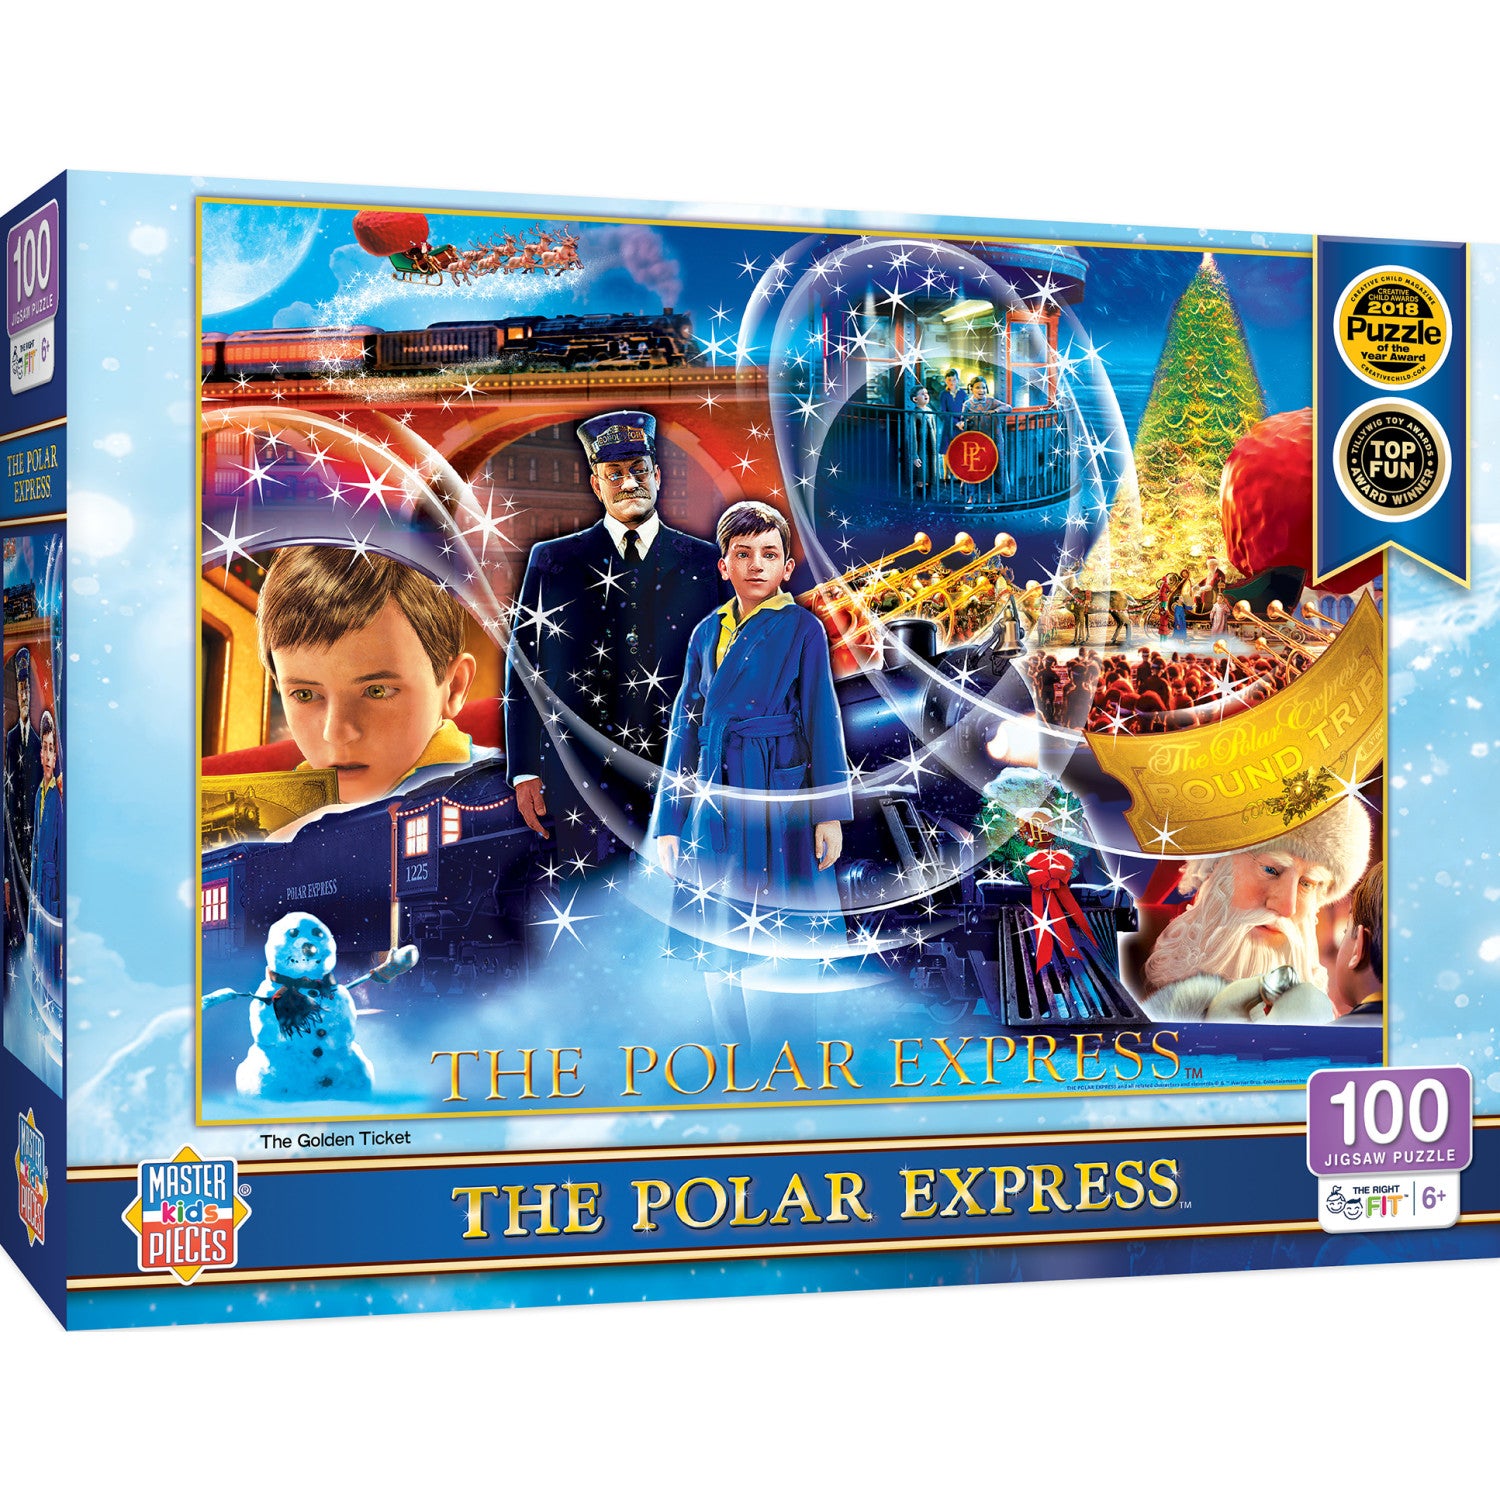 Polar Express - The Golden Ticket 100 Piece Christmas Puzzle